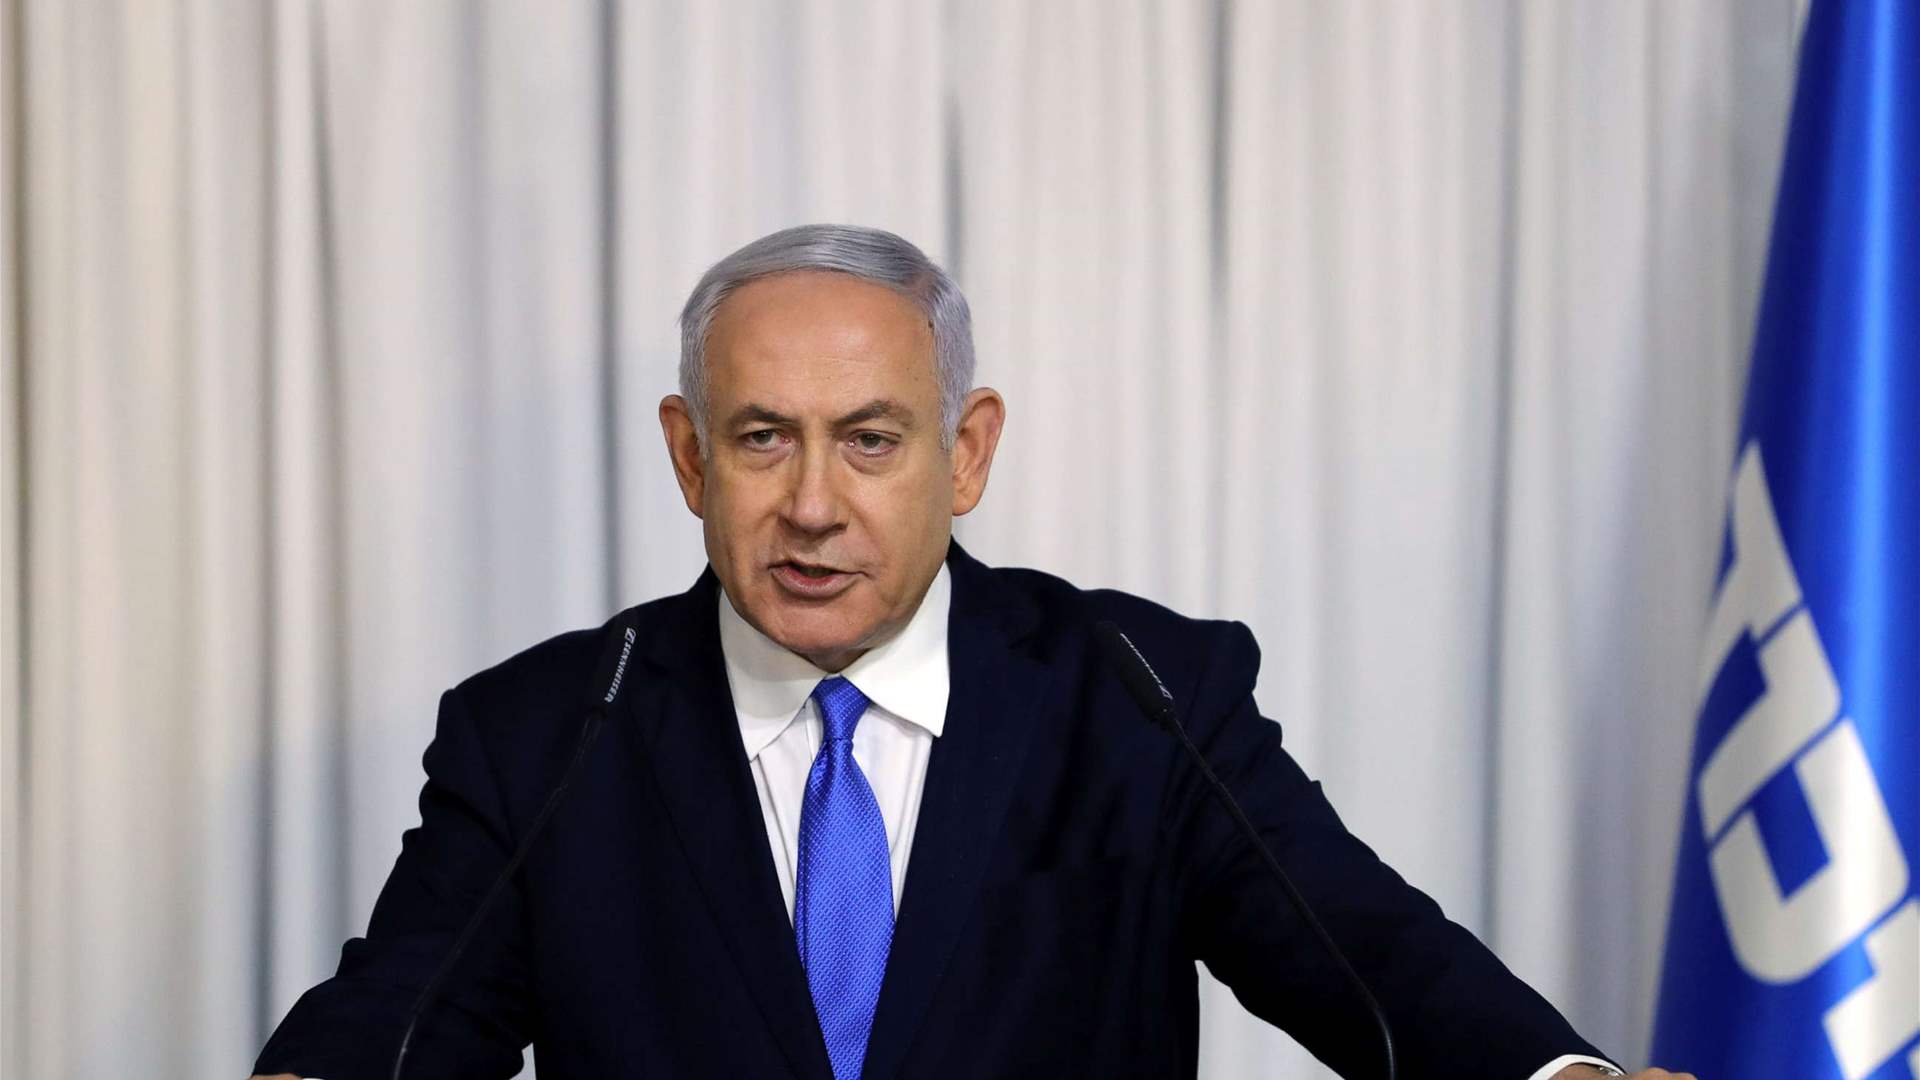 Netanyahu says he has not spoken to Biden since &#39;over the top&#39; remarks